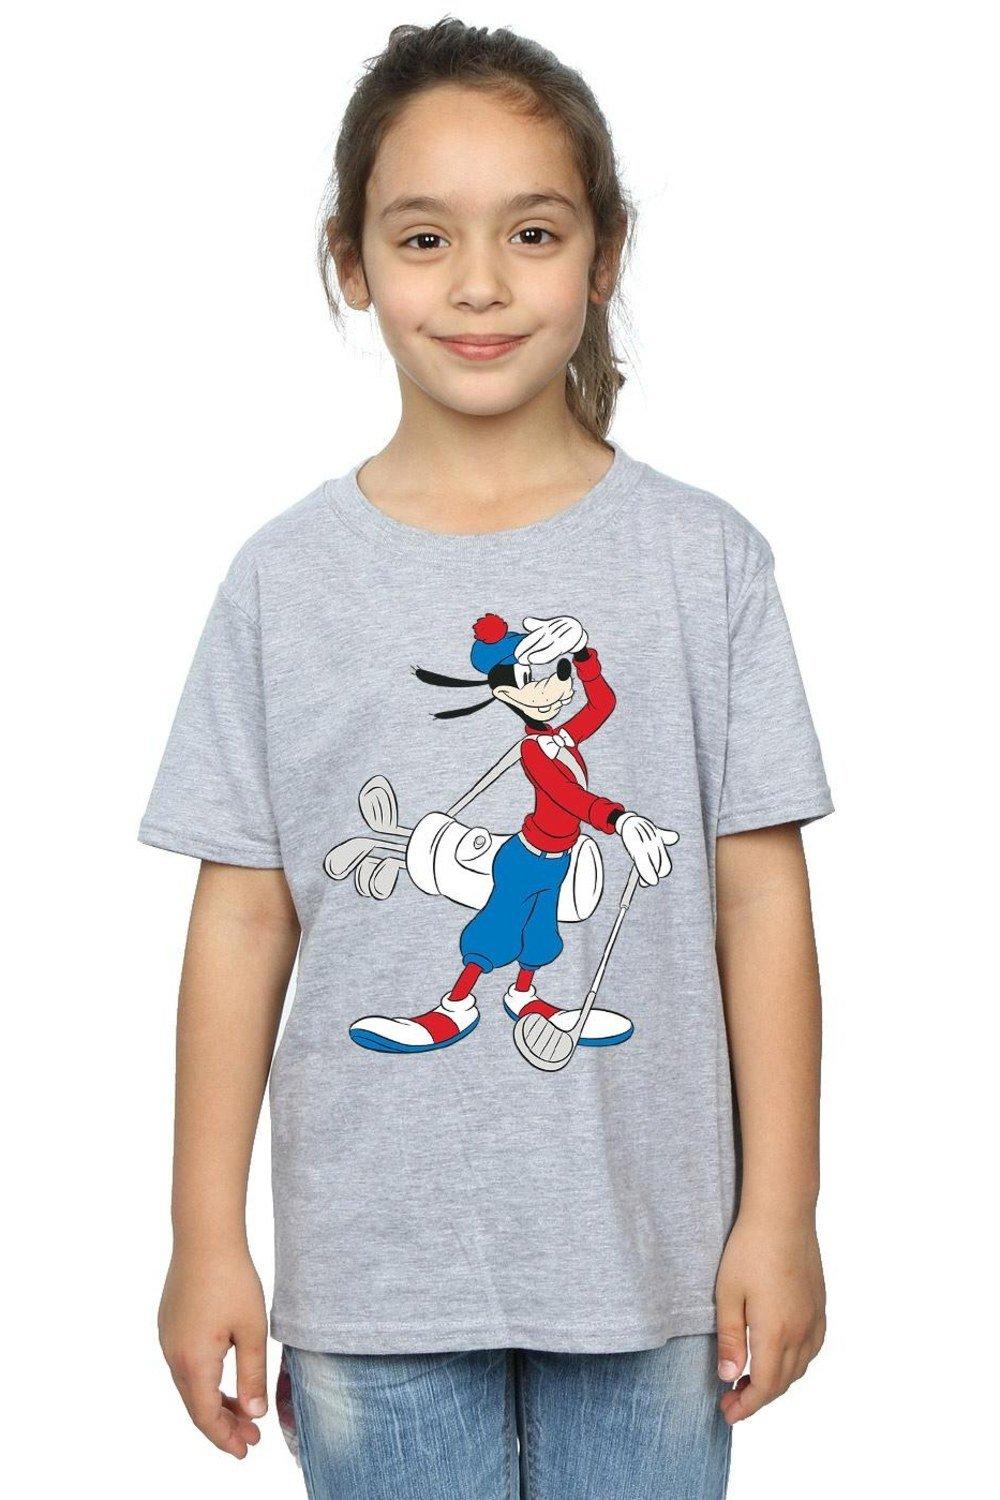 Хлопковая футболка Goofy Golf Disney, серый футболка goofy tour de goofy disney серый